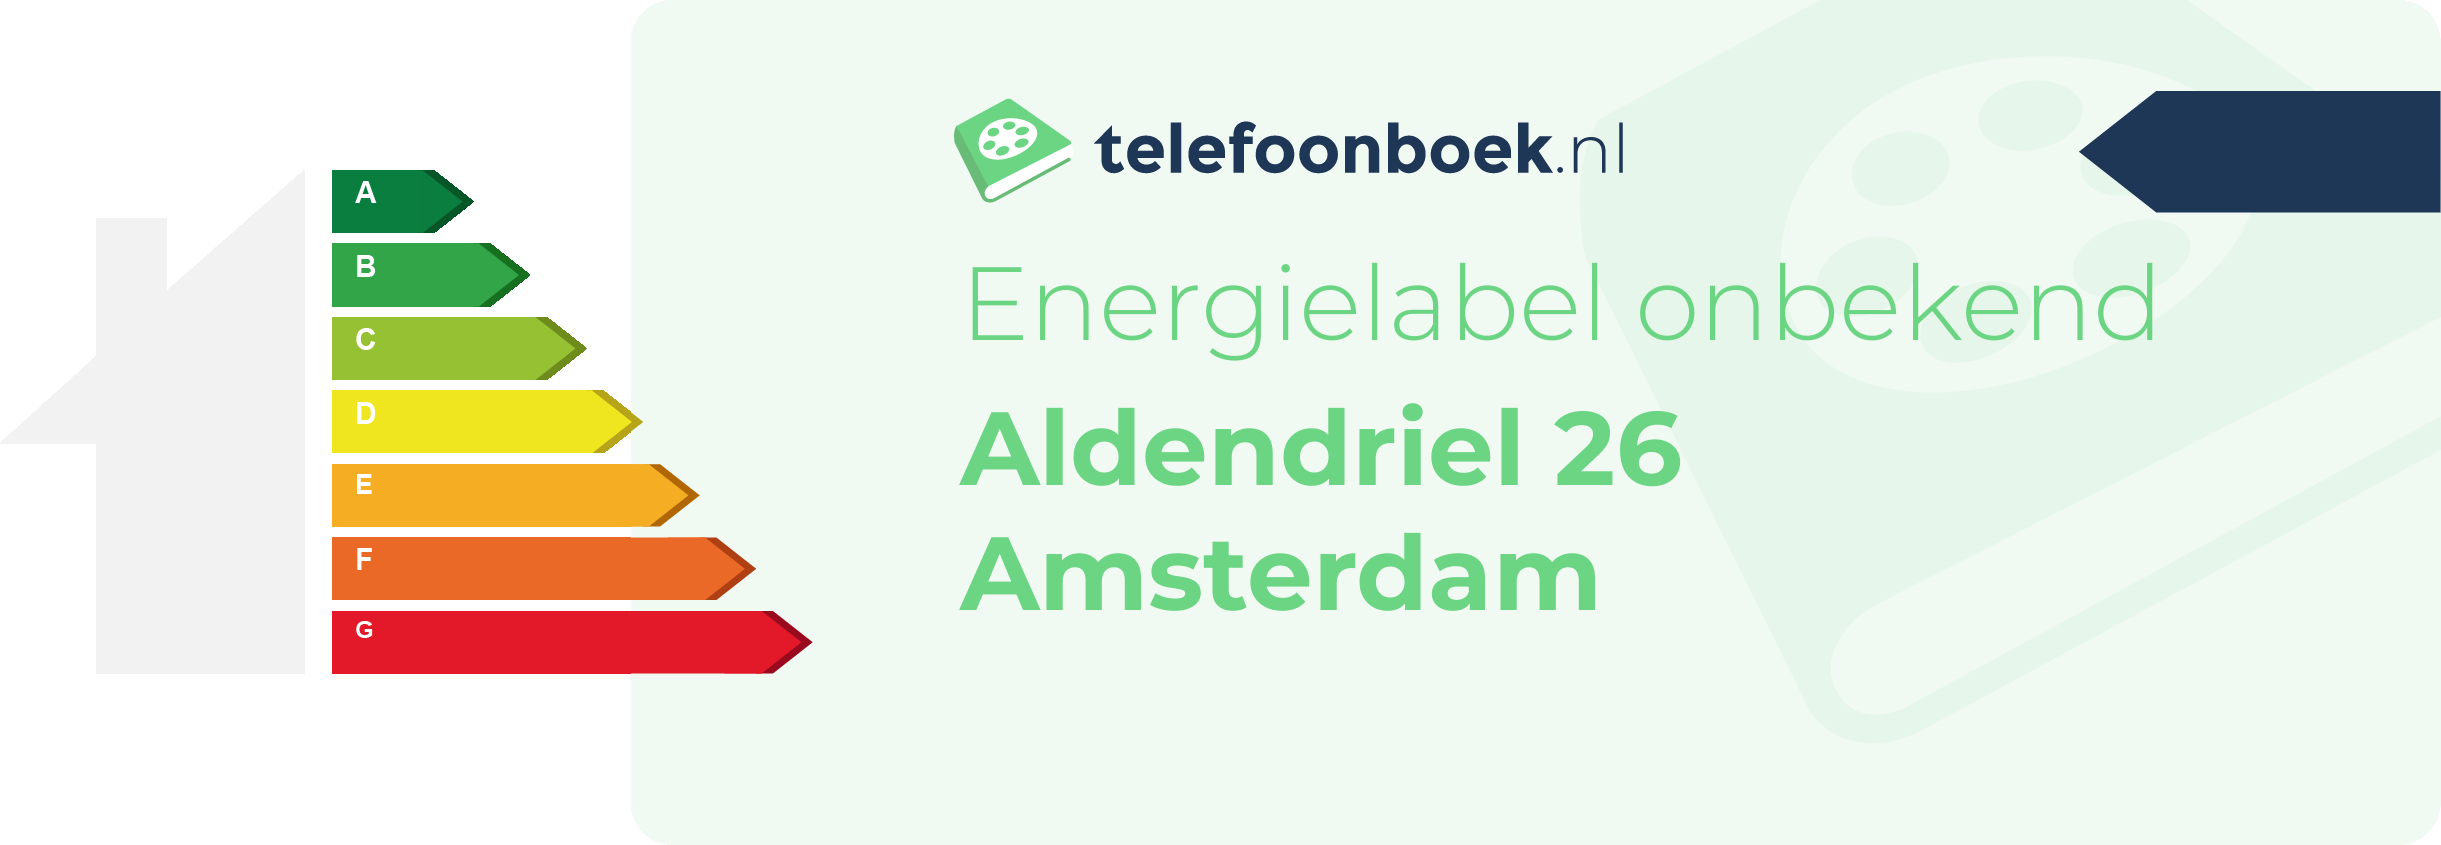 Energielabel Aldendriel 26 Amsterdam